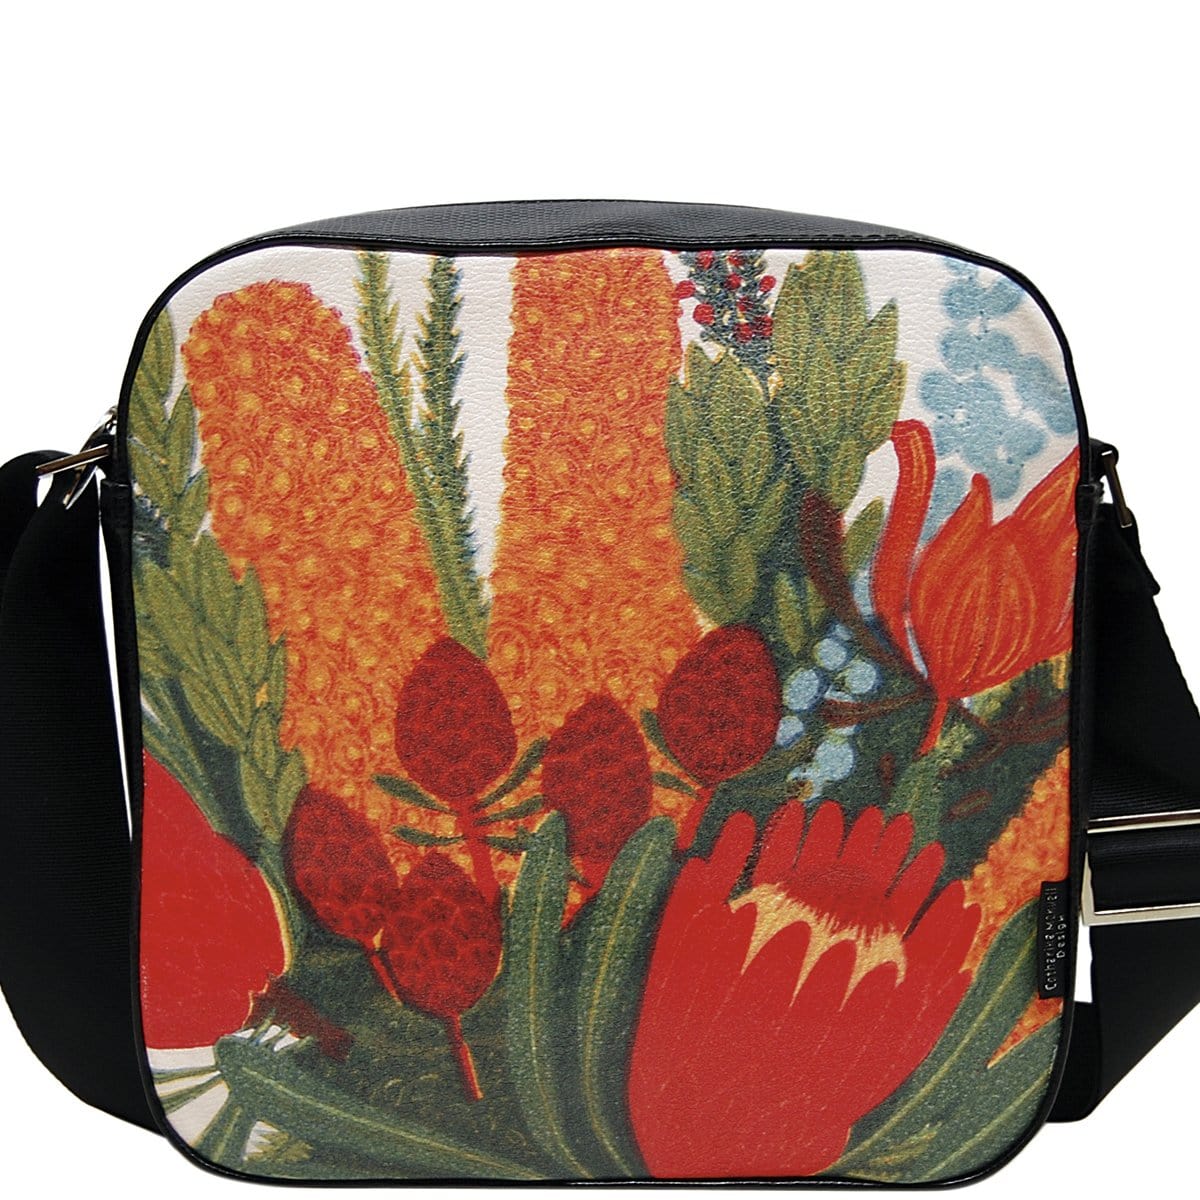 Floral Tote Bag - Native Posy